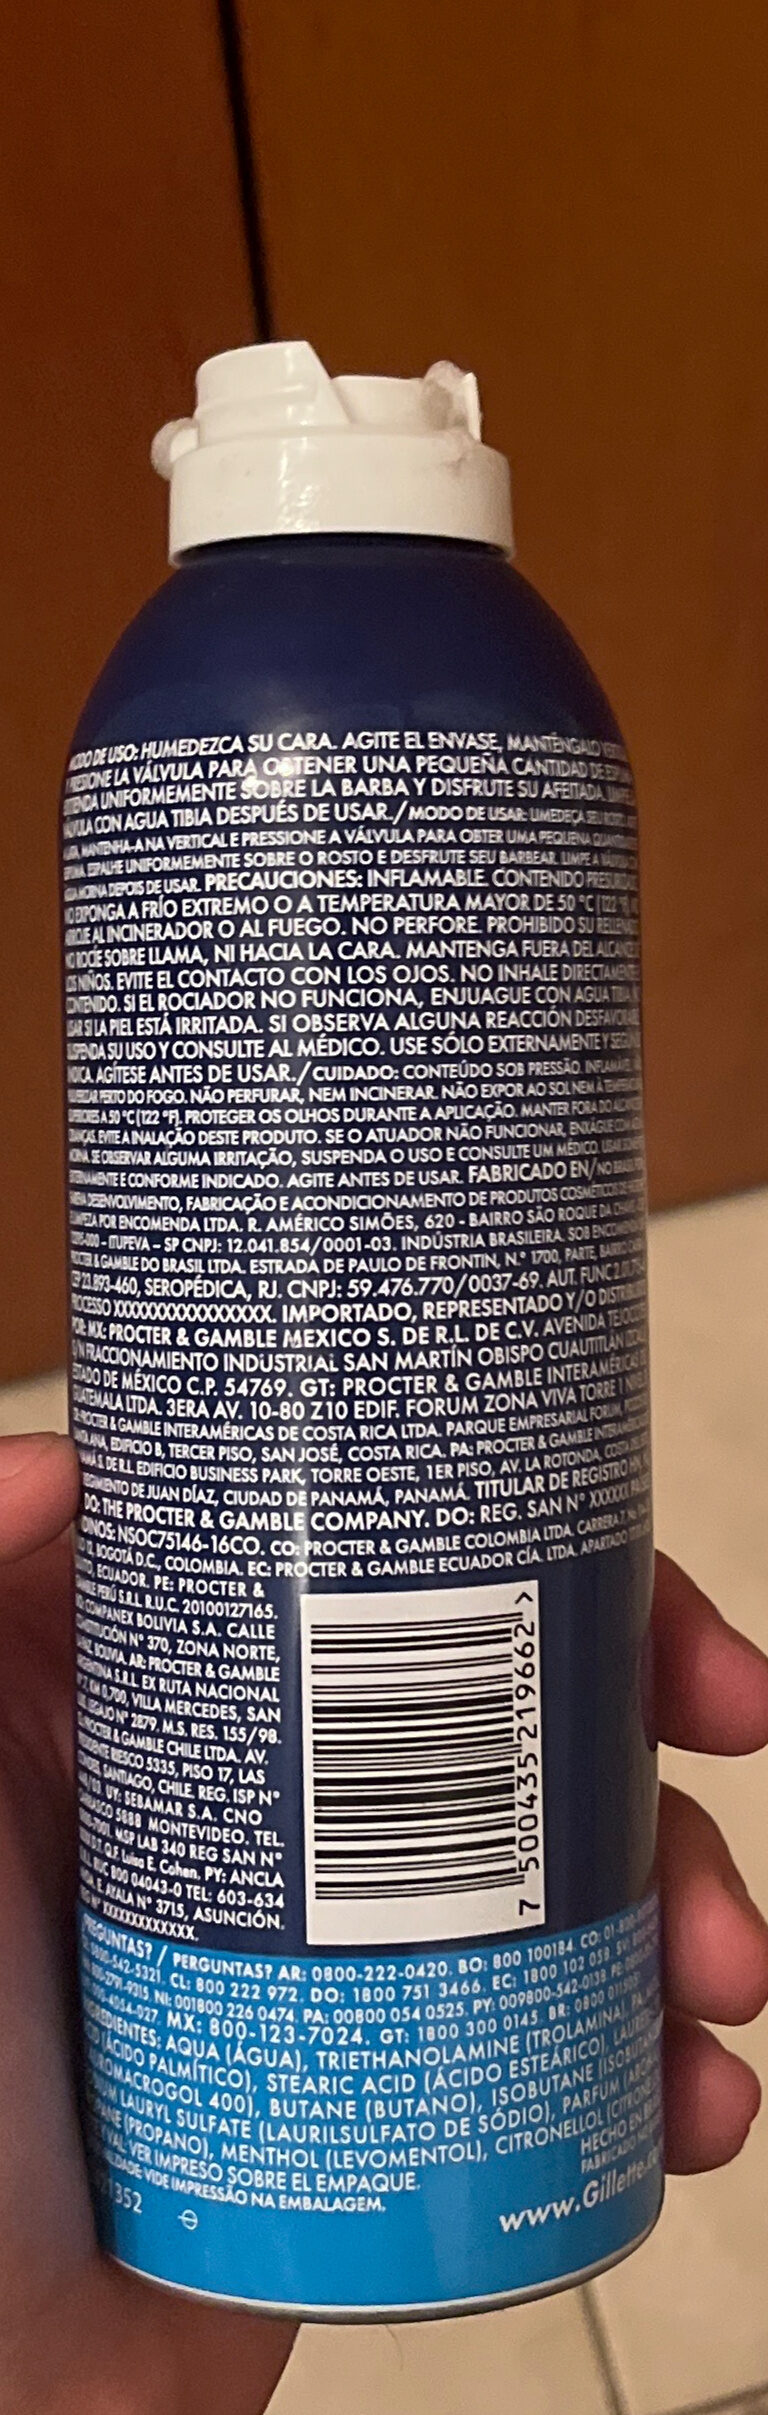 Gillette foamy mentol - Ingredients - es